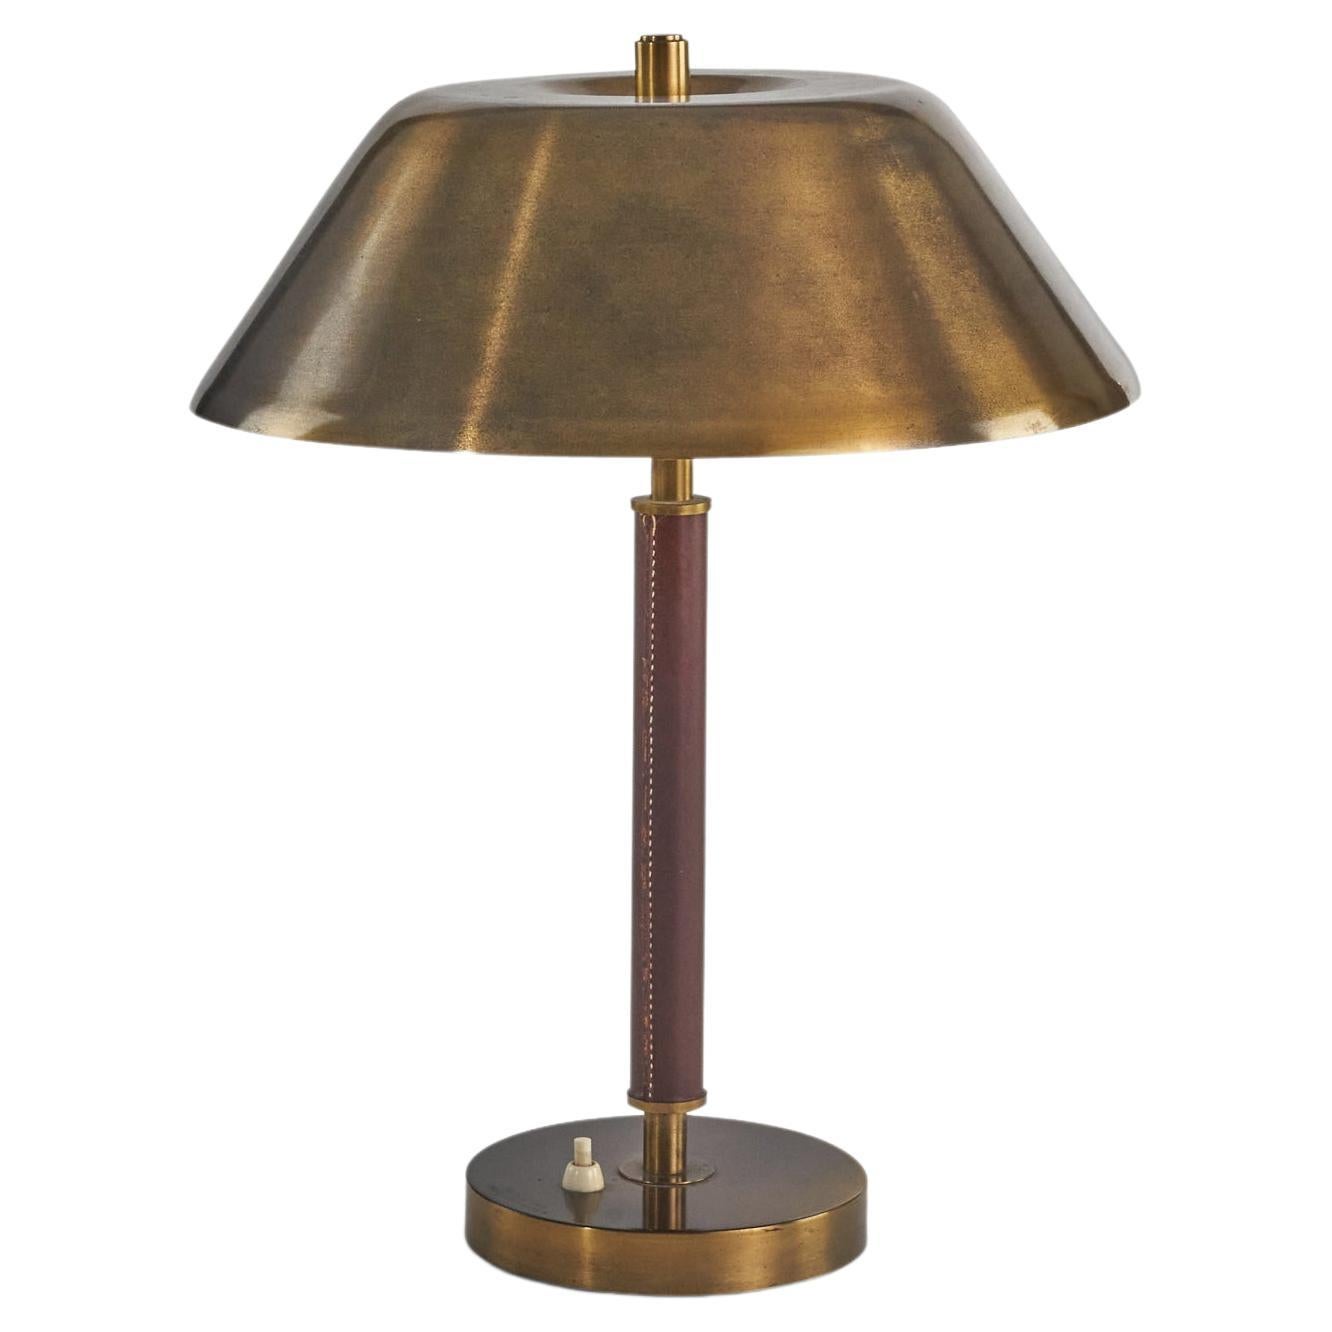 Falkenberg Belysning, Table Lamp, Brass, Stitched Leather, Sweden, 1950s